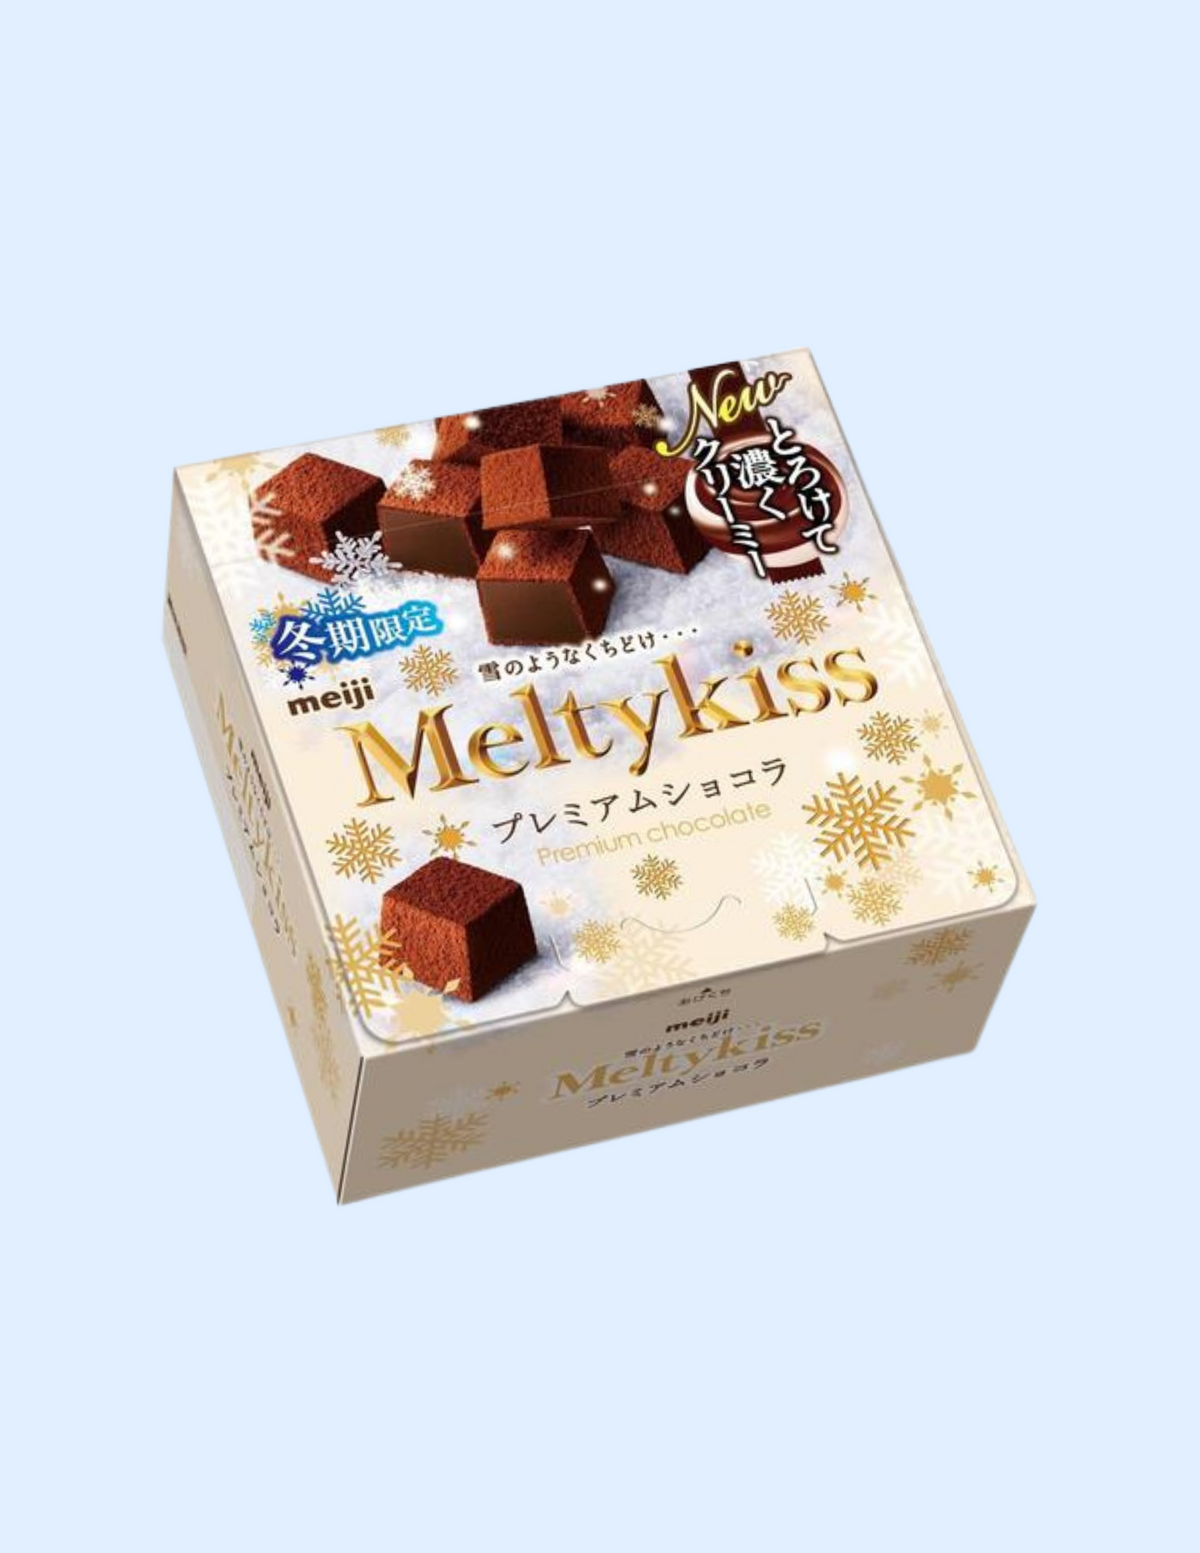 Meiji Meltykiss Premium Chocolate - Unique Bunny